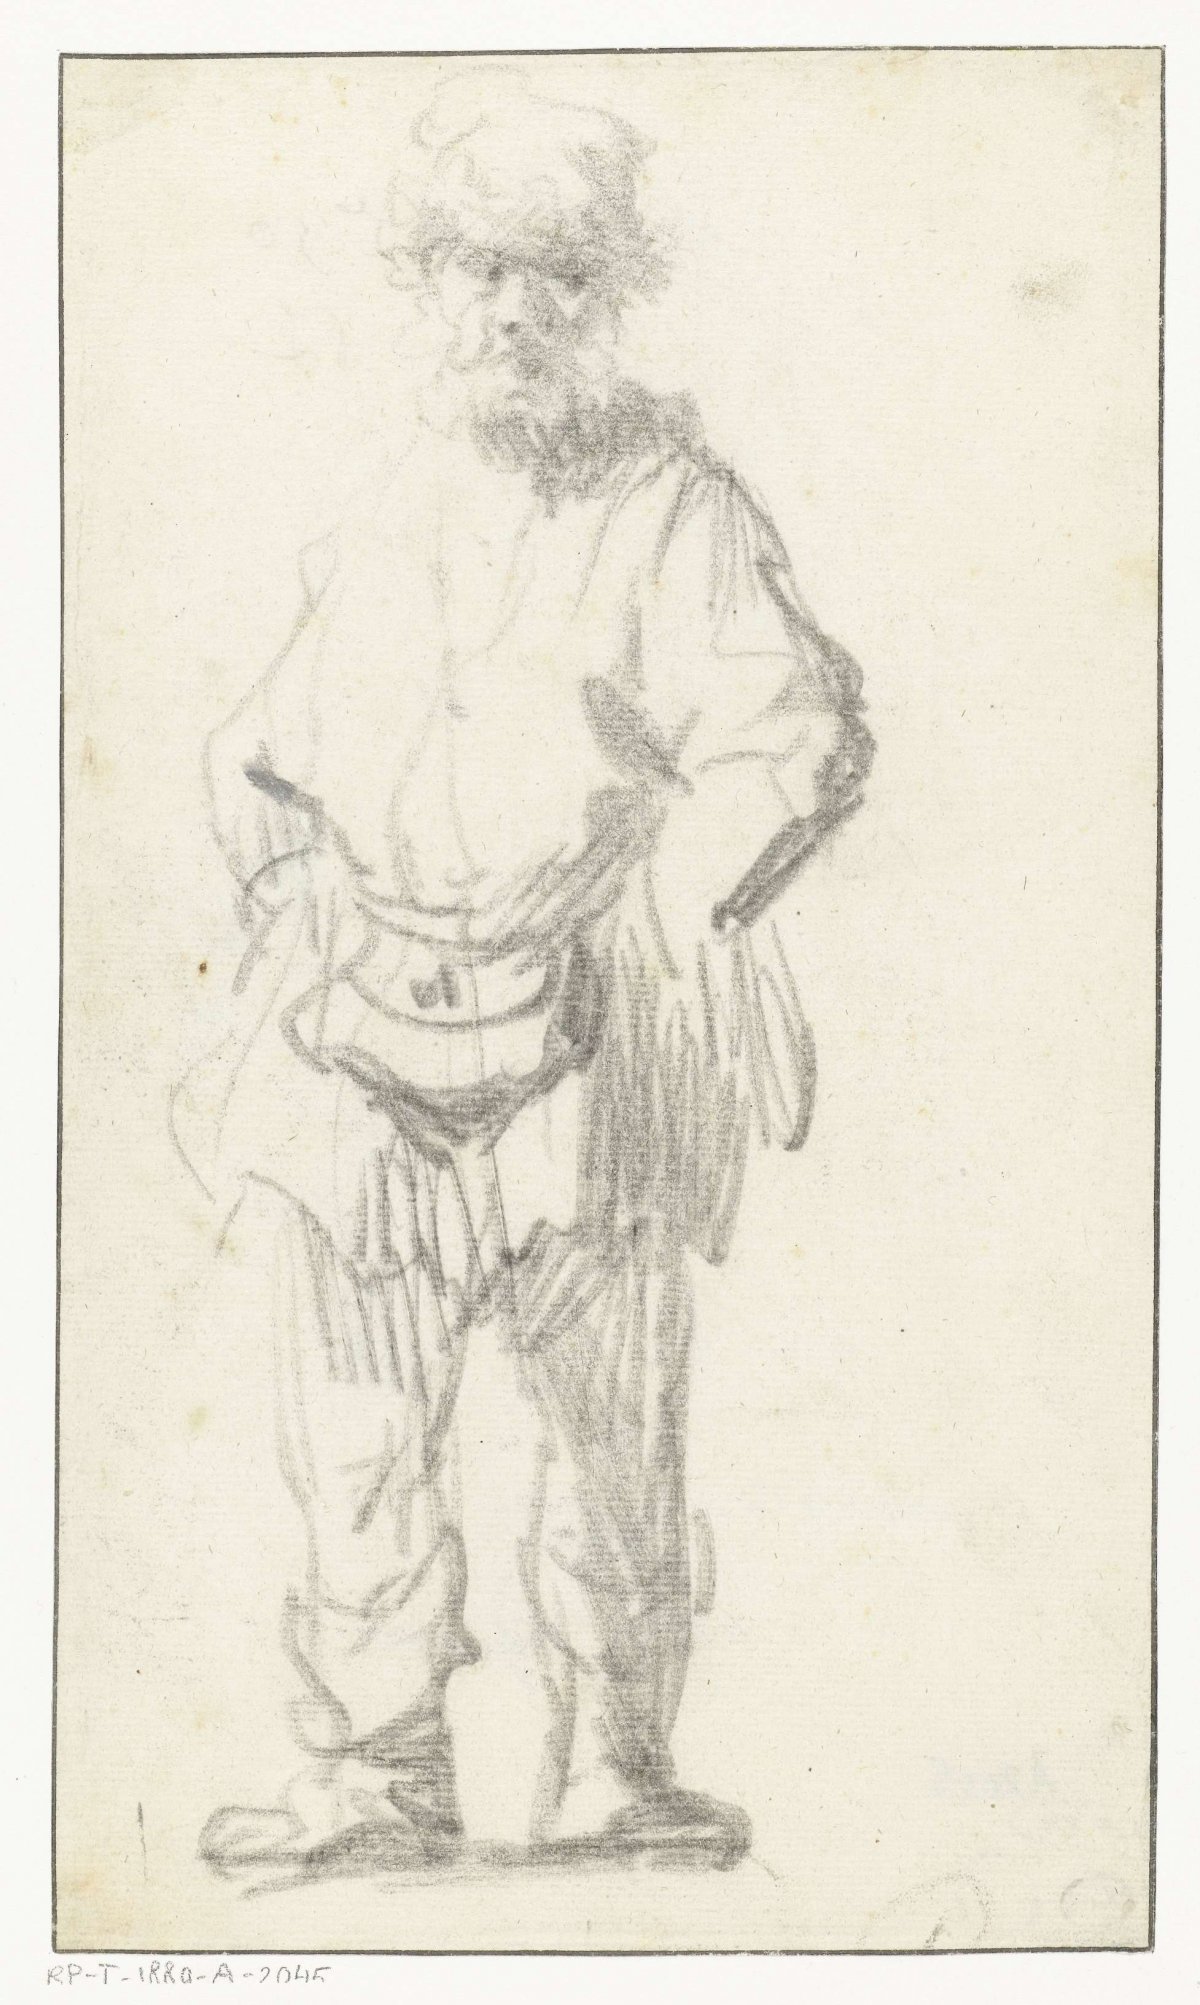 Standing Man with a Pouch, Rembrandt van Rijn, c. 1629 - c. 1630